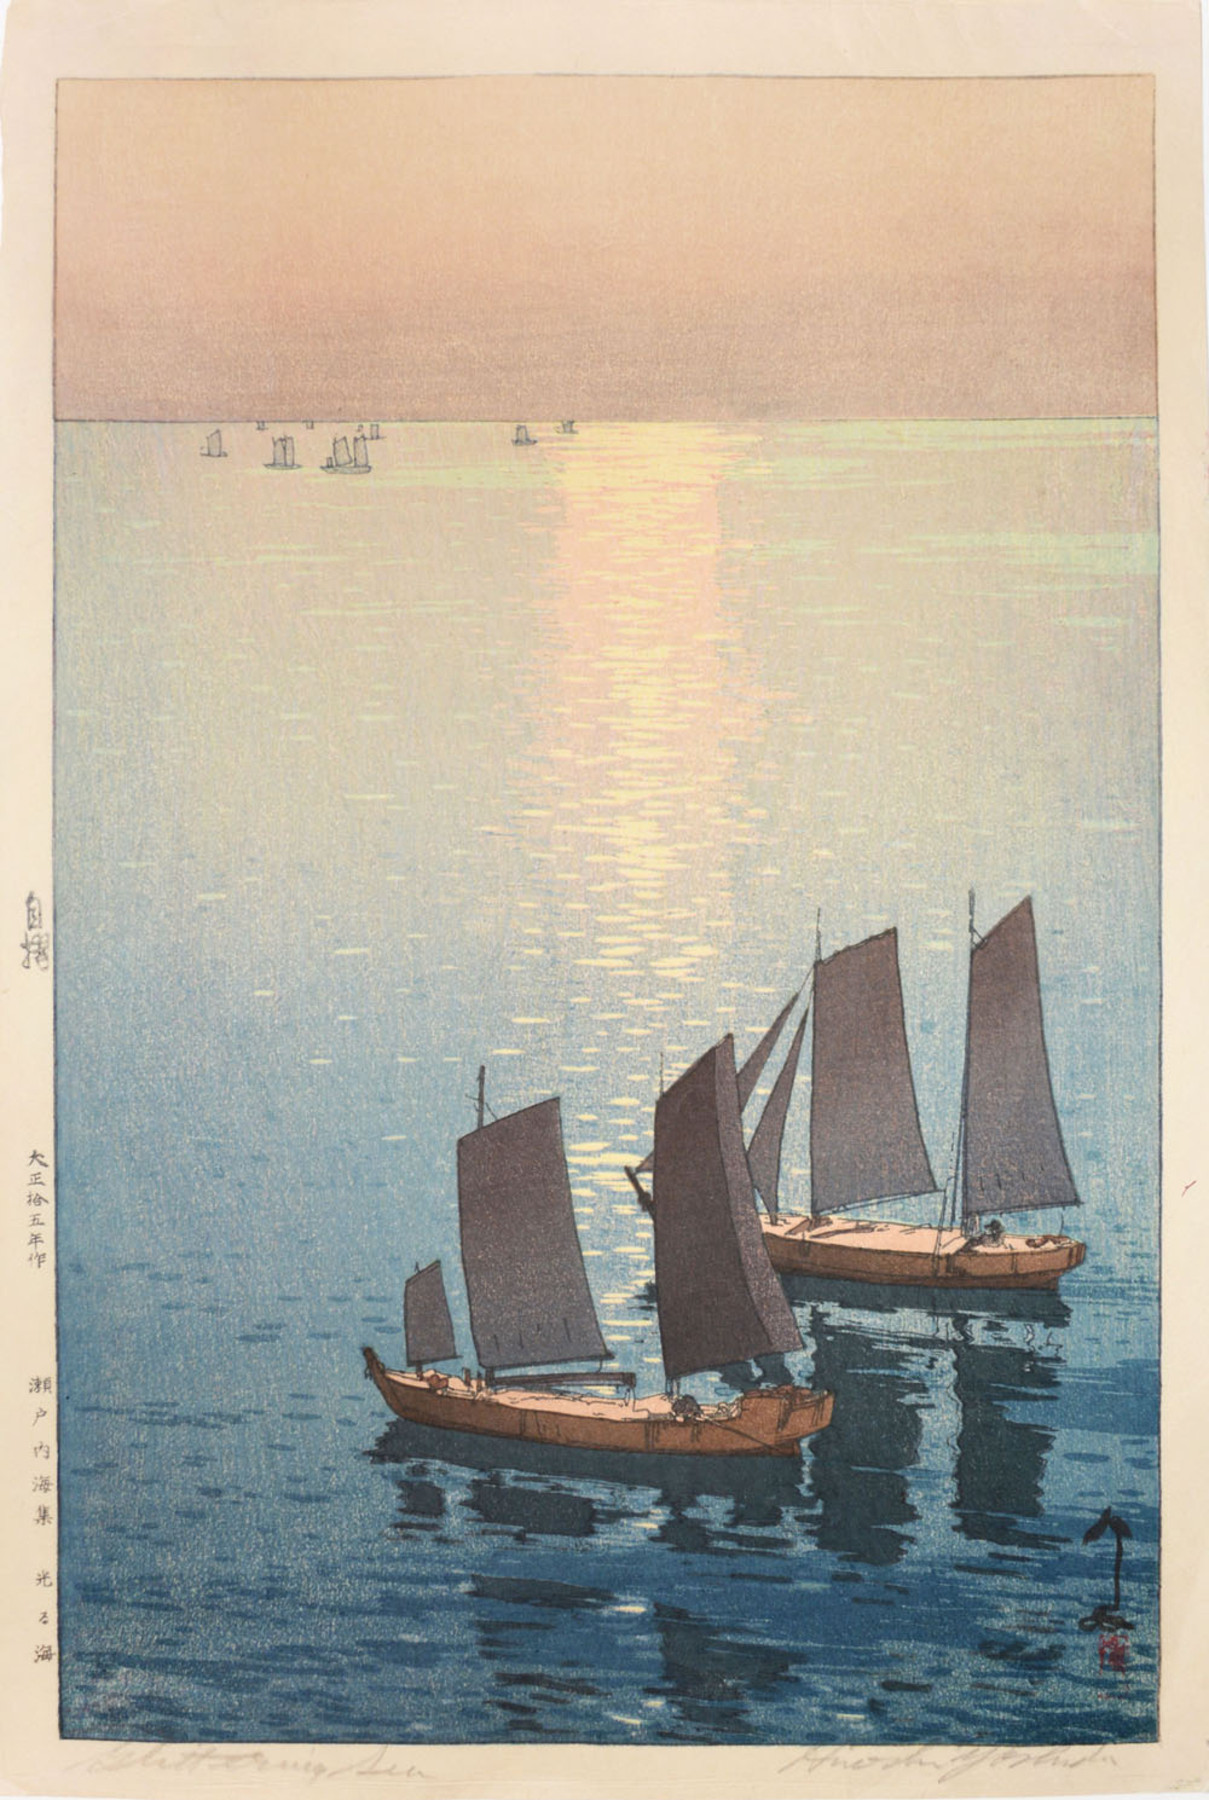 Glittering Sea by Hiroshi Yoshida - 1926 - 25 x 38 cm Library of Congress